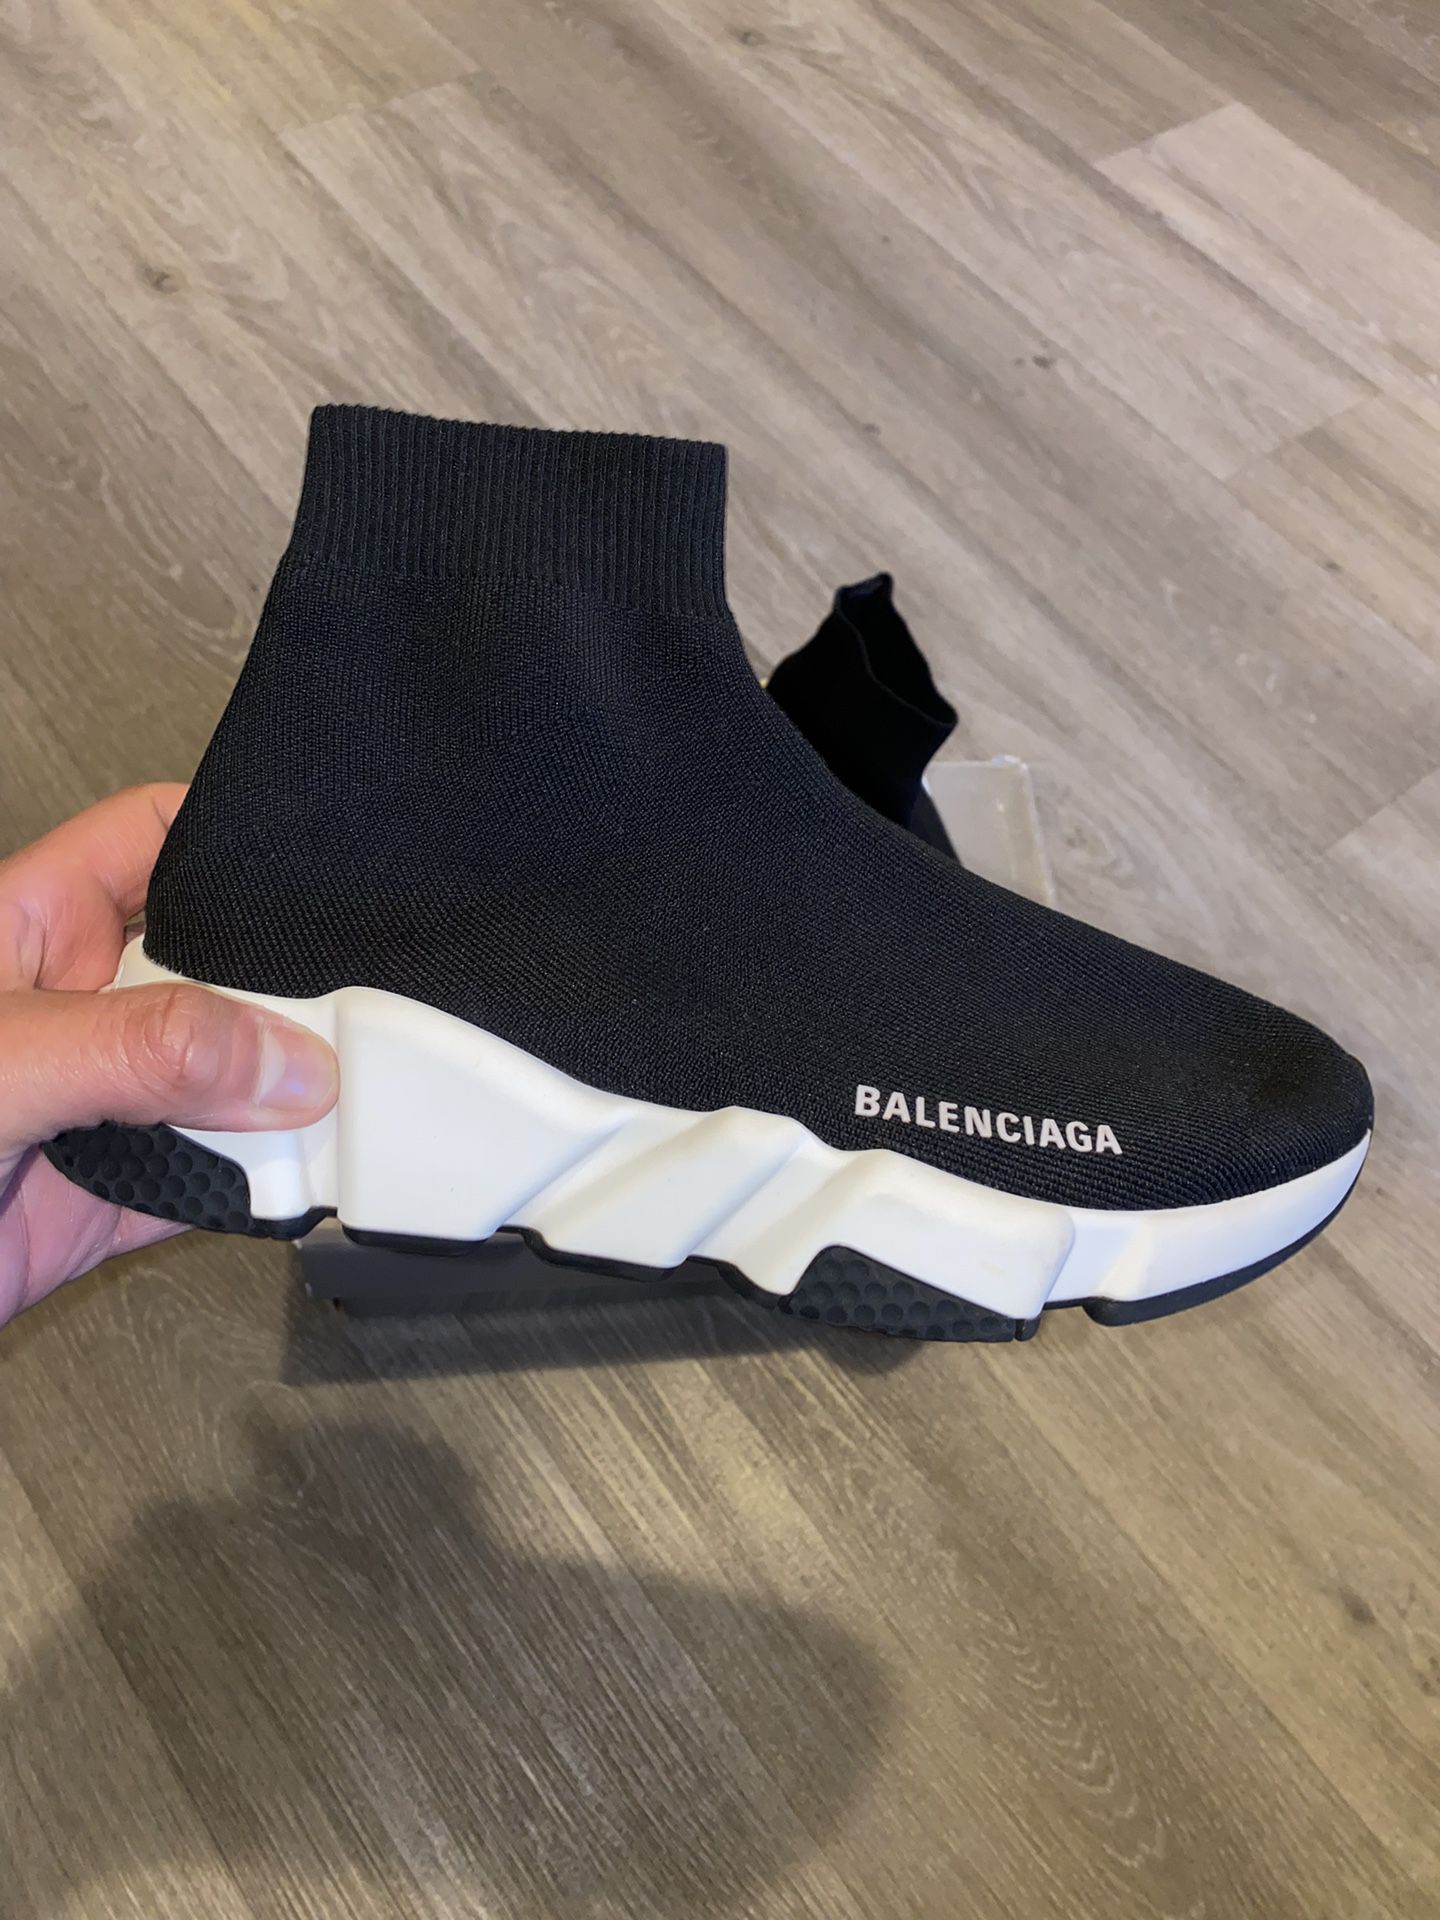 Balenciaga Speed Sneaker 'Black' for Sale in Santa Ana, CA - OfferUp